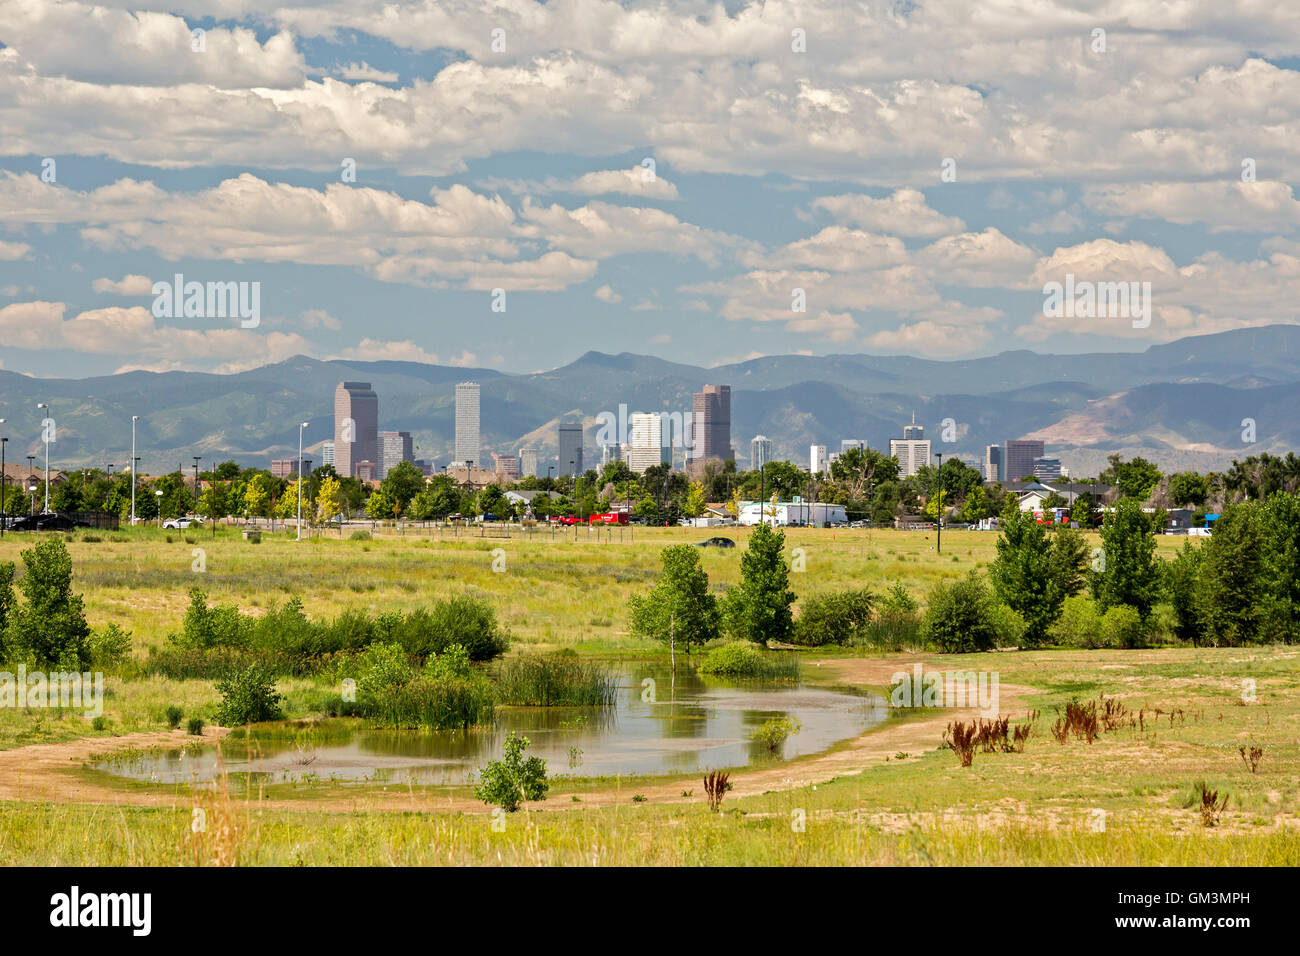 Denver, Colorado - Downtown Denver from Rocky Mountain Arsenal National Wildlife Refuge. Stock Photo